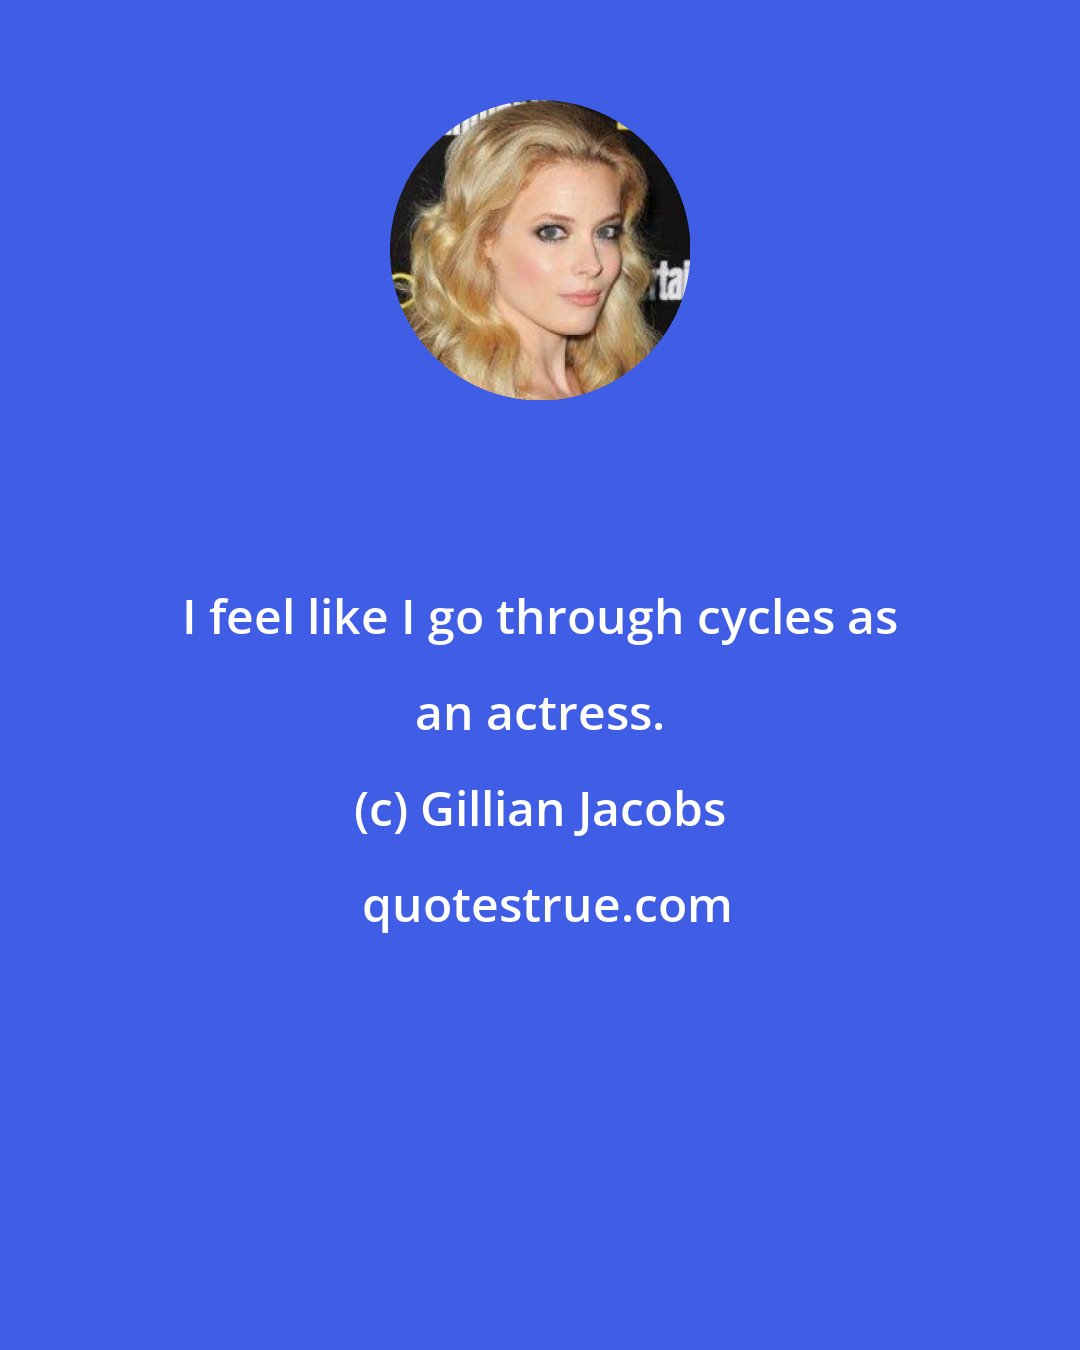 Gillian Jacobs: I feel like I go through cycles as an actress.